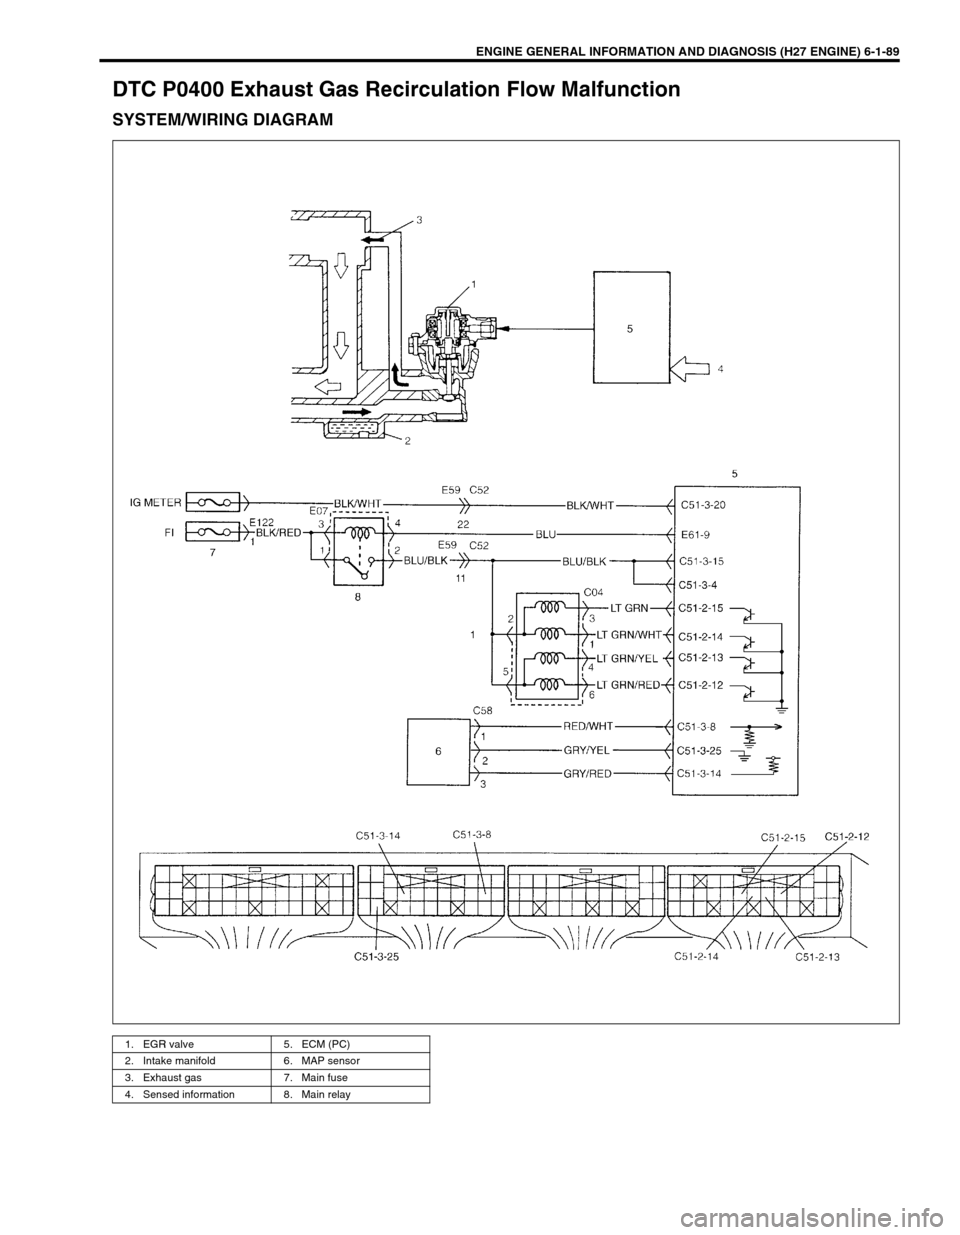 SUZUKI GRAND VITARA 1999 2.G Owners Manual ENGINE GENERAL INFORMATION AND DIAGNOSIS (H27 ENGINE) 6-1-89
DTC P0400 Exhaust Gas Recirculation Flow Malfunction
SYSTEM/WIRING DIAGRAM
1. EGR valve 5. ECM (PC)
2. Intake manifold 6. MAP sensor
3. Exh